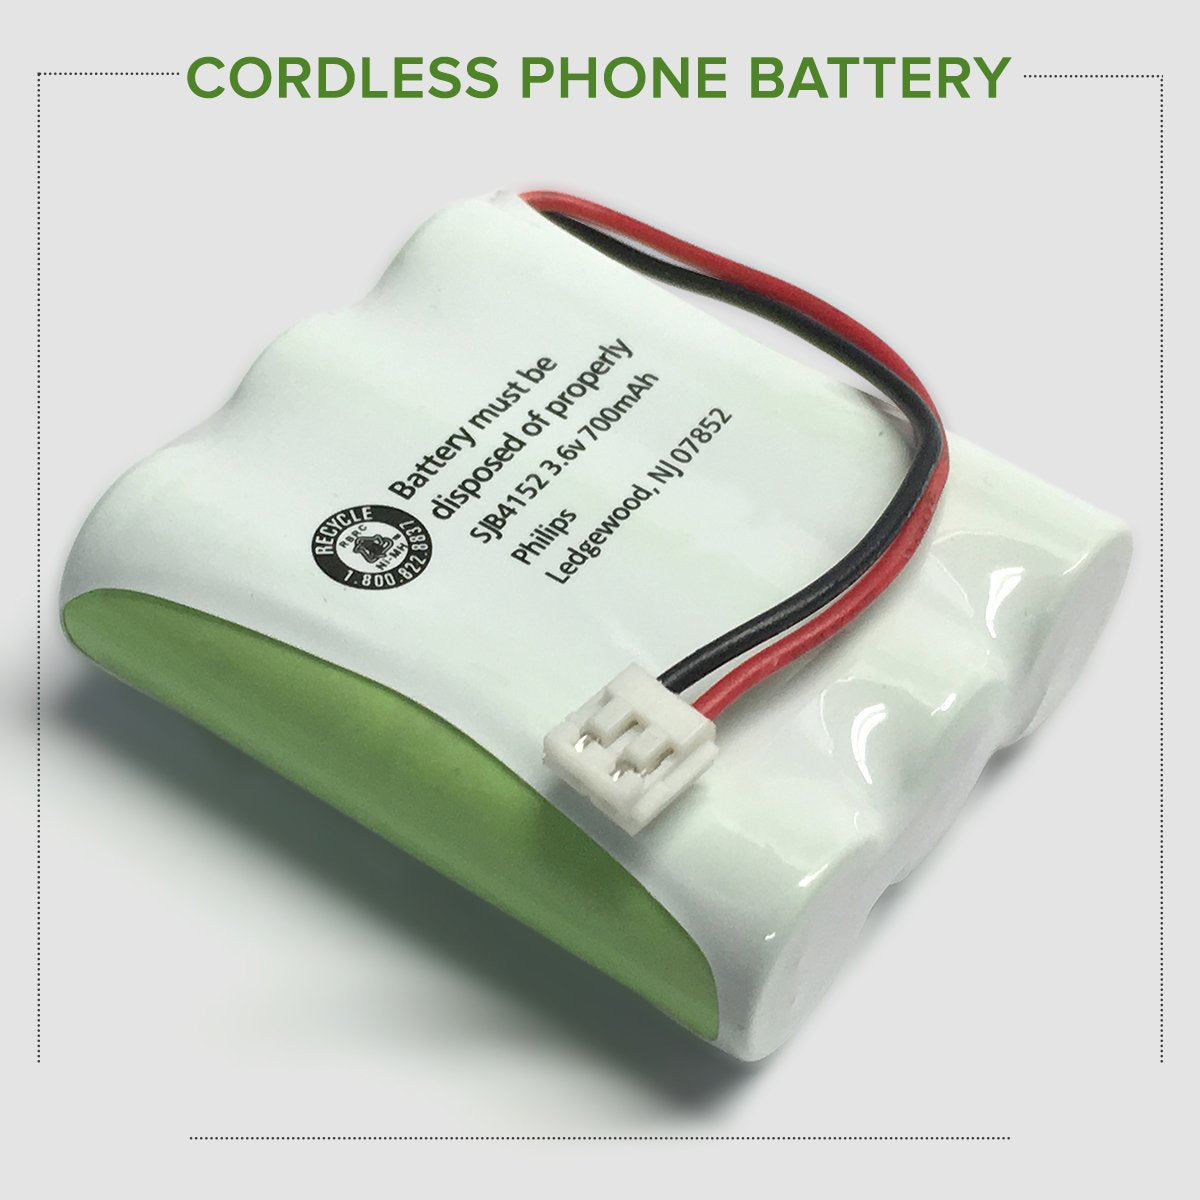 AT&T  E5908 Cordless Phone Battery